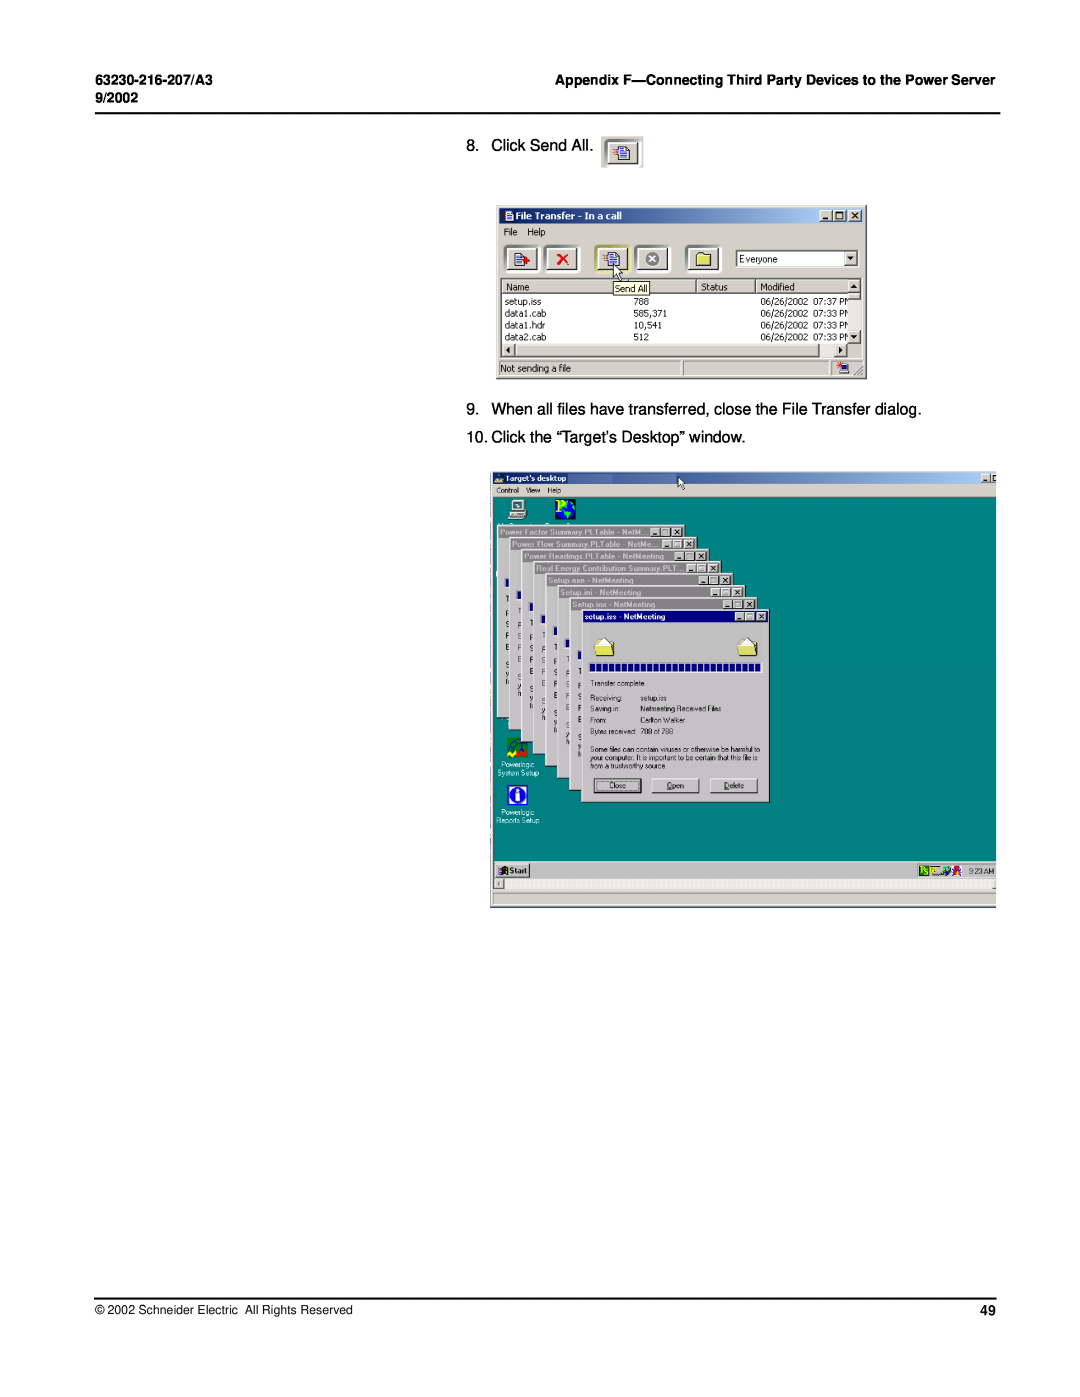 Schneider Electric PWRSRV750 Click Send All, When all files have transferred, close the File Transfer dialog, 9/2002 